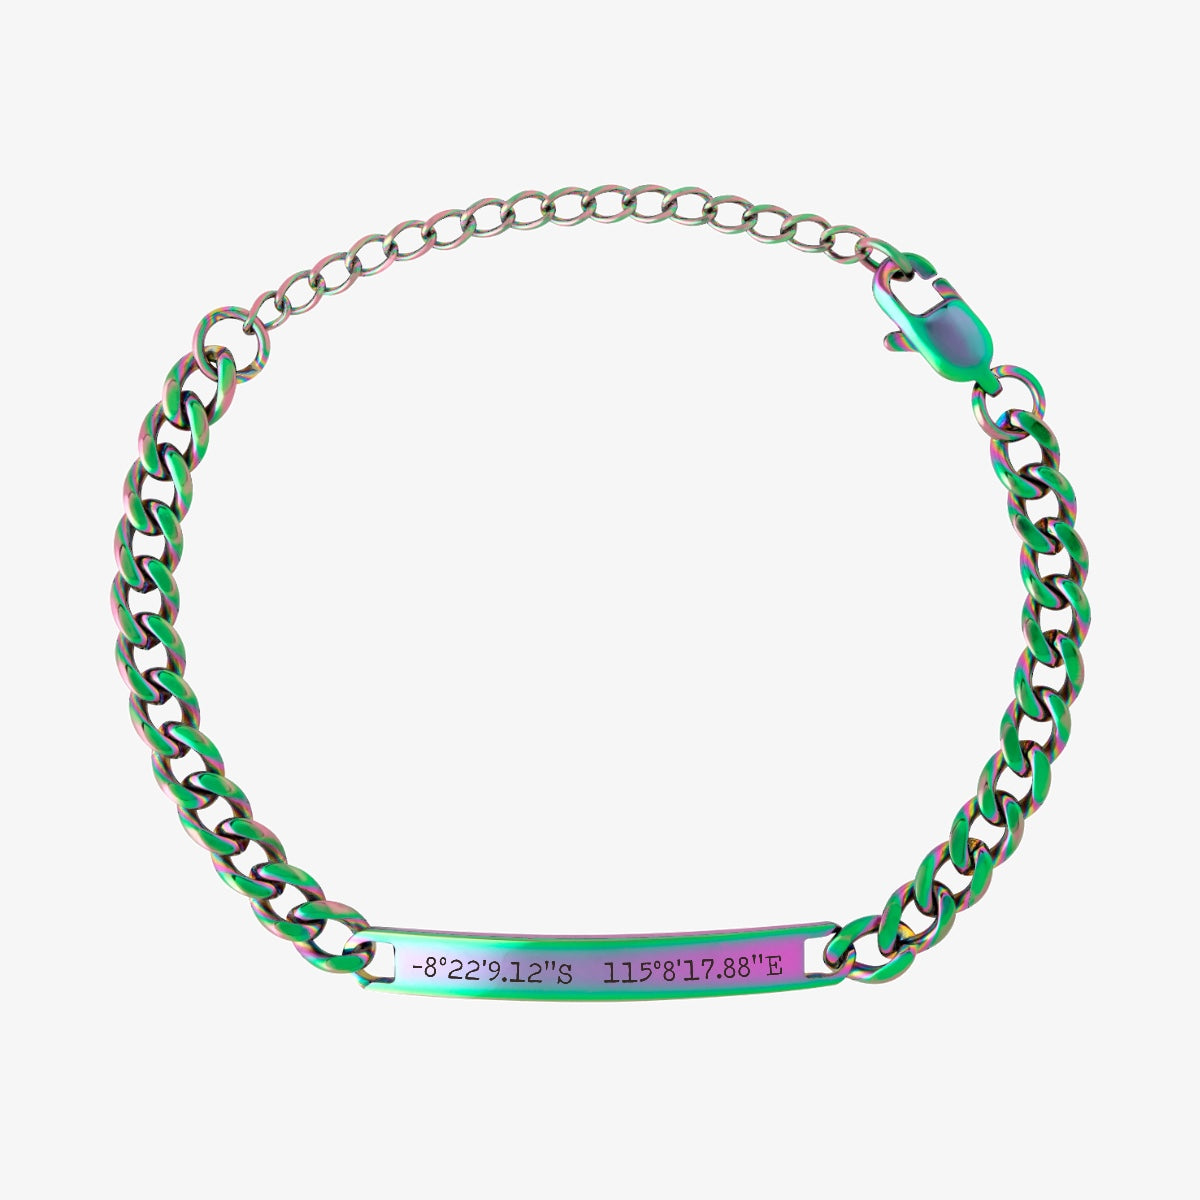 Customizable bracelet with coordinates in aurora